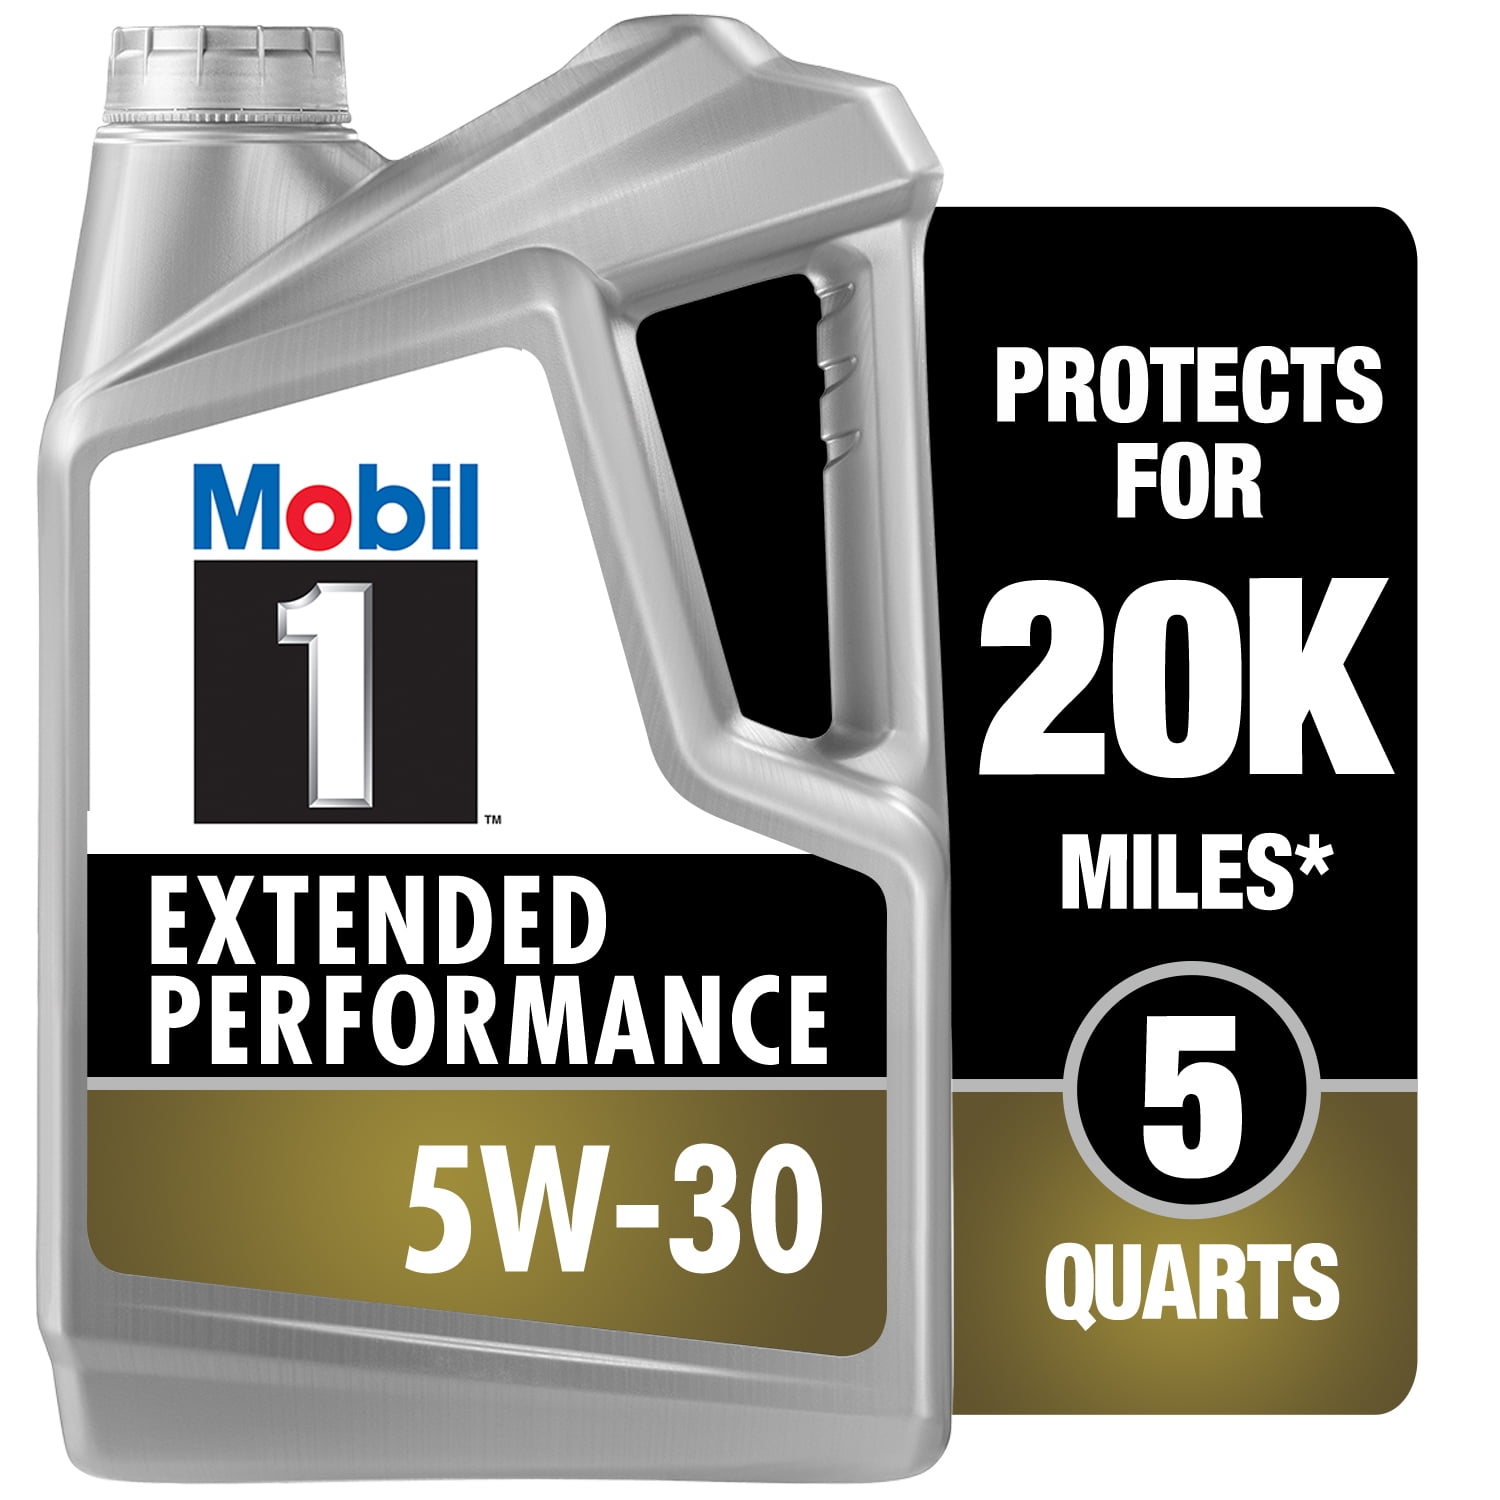 Mobil 1 Extended Performance Full Synthetic Motor Oil 5W-30, 5 qt -  